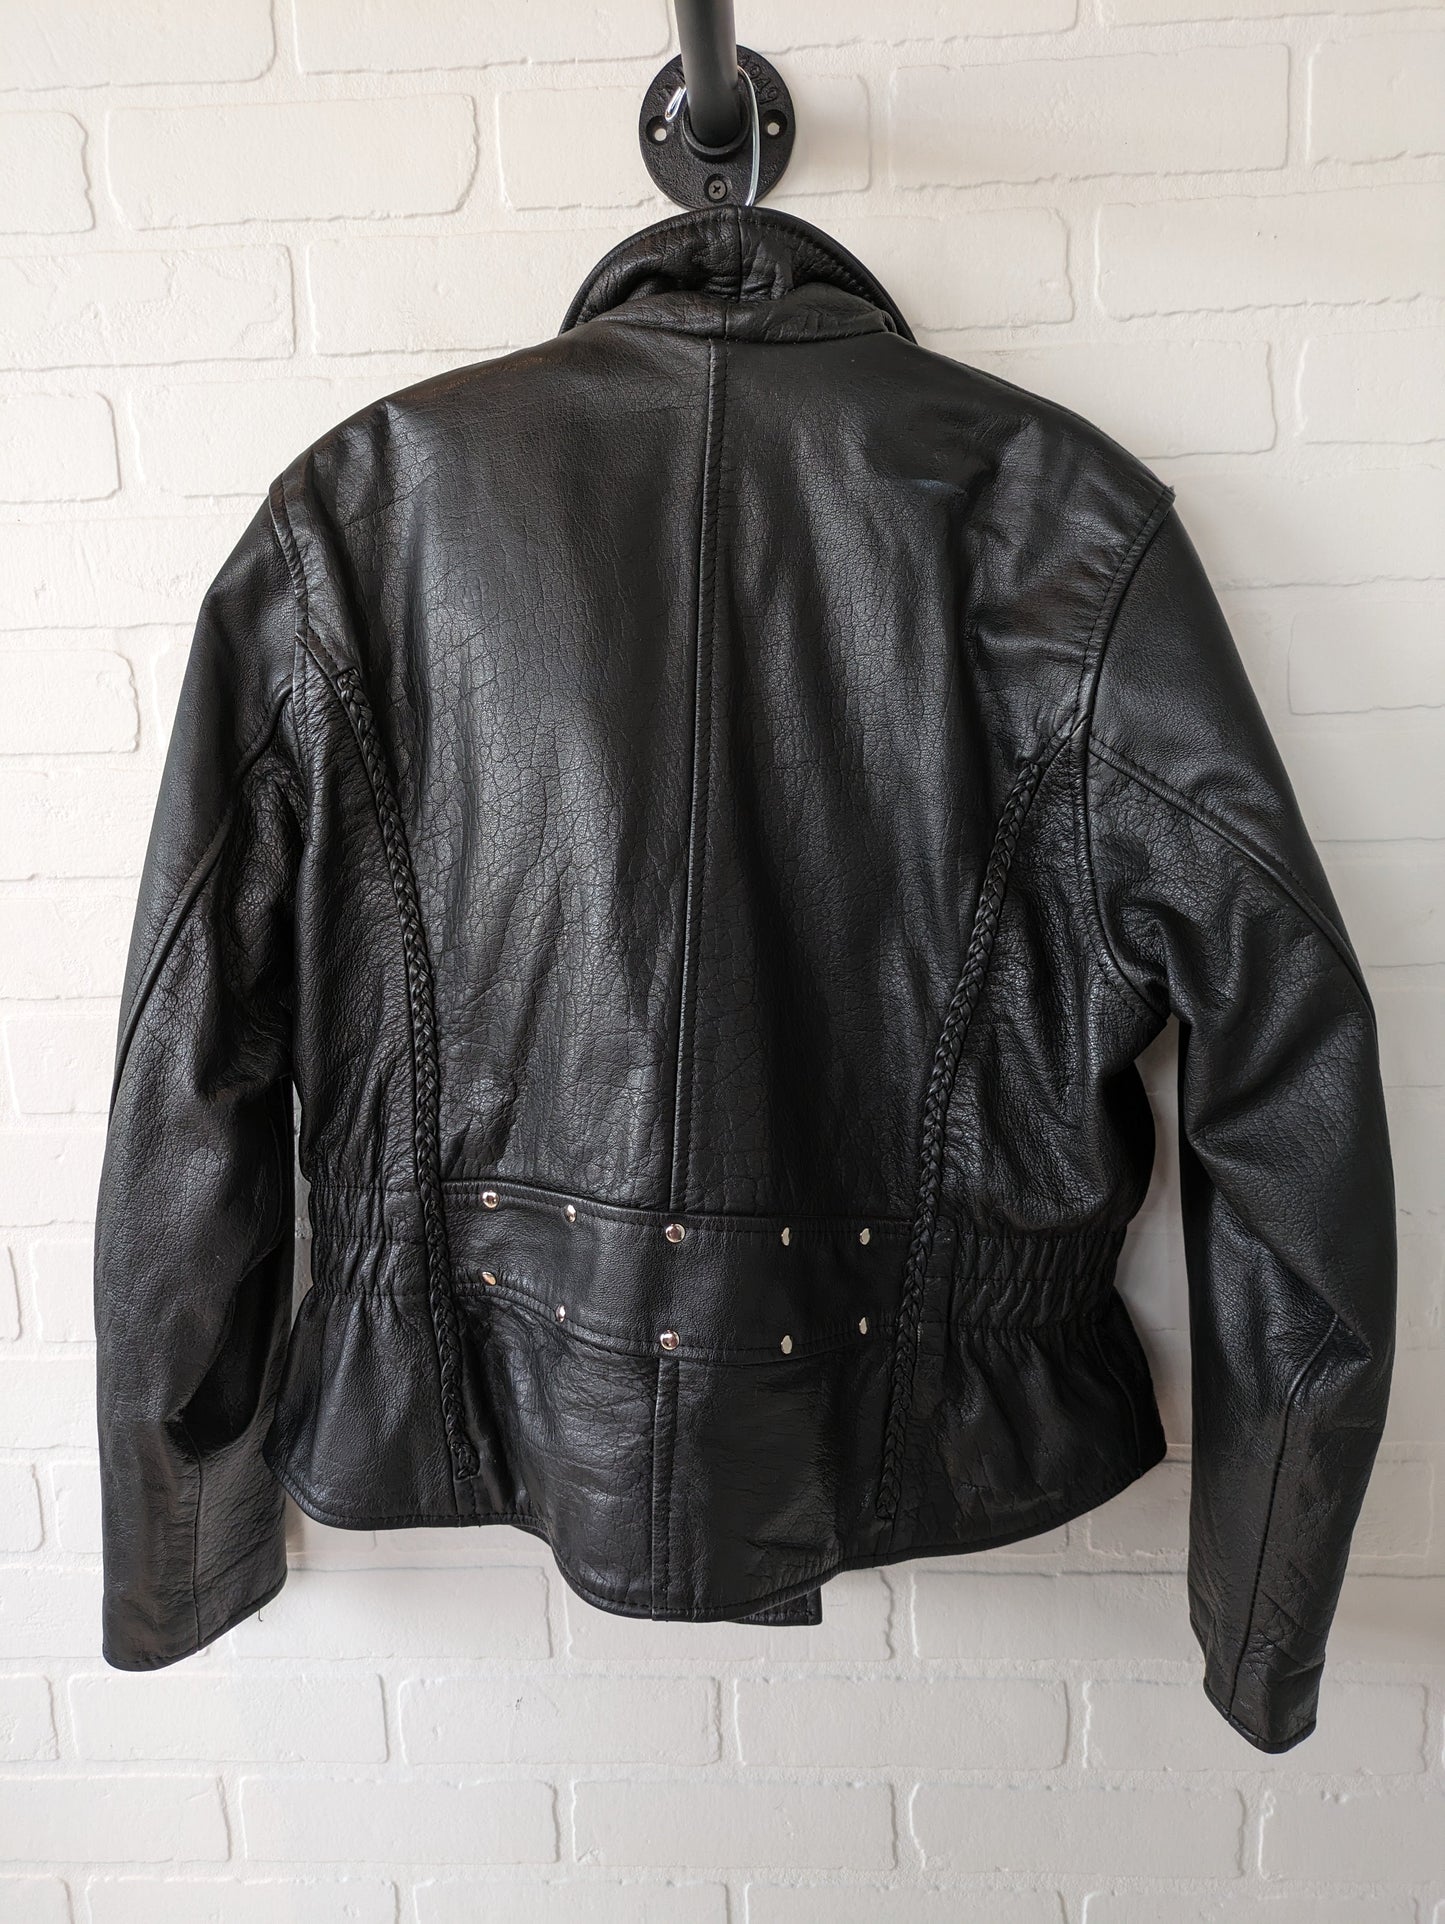 Jacket Moto Leather By Cmc  Size: 2x